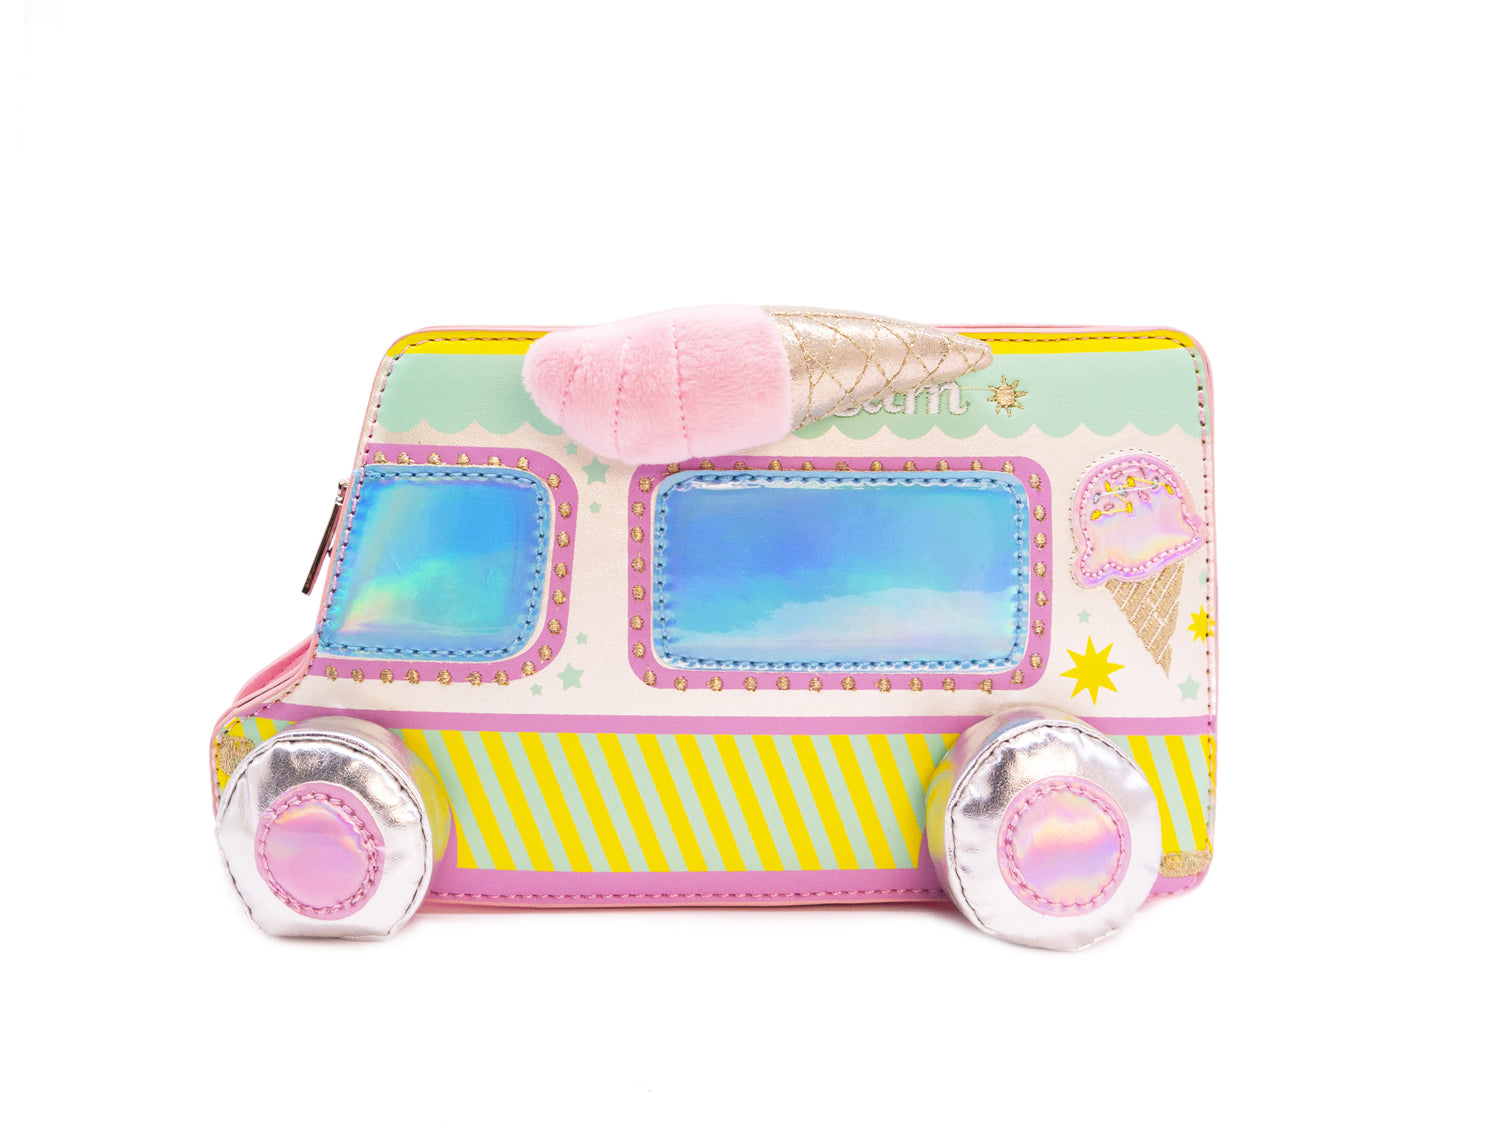 Let's Scream for Ice Cream Truck Handbag - Bewaltz